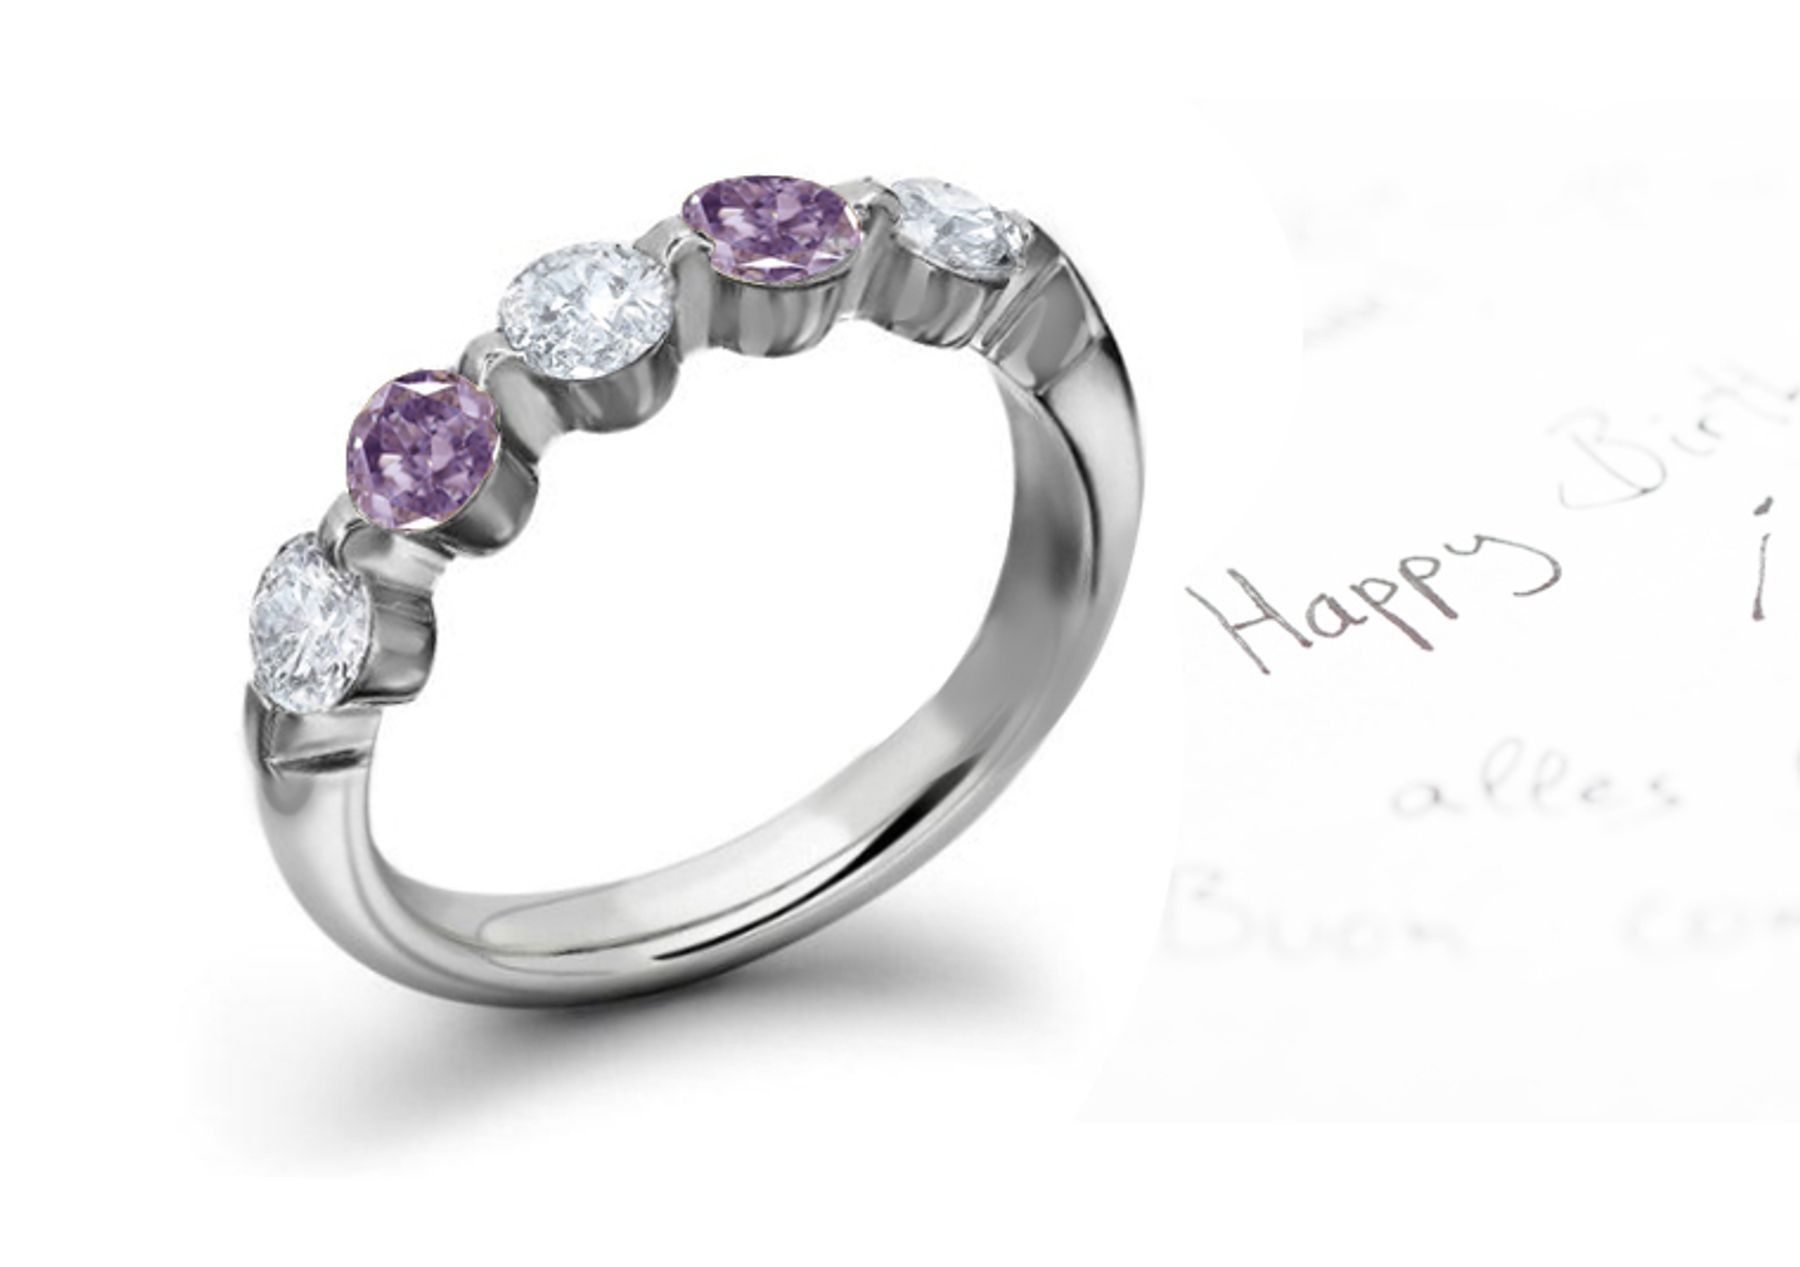 Five Stone Pink Diamond & Whit Diamonds Wedding & Anniversary Ring in Platinum & White Gold